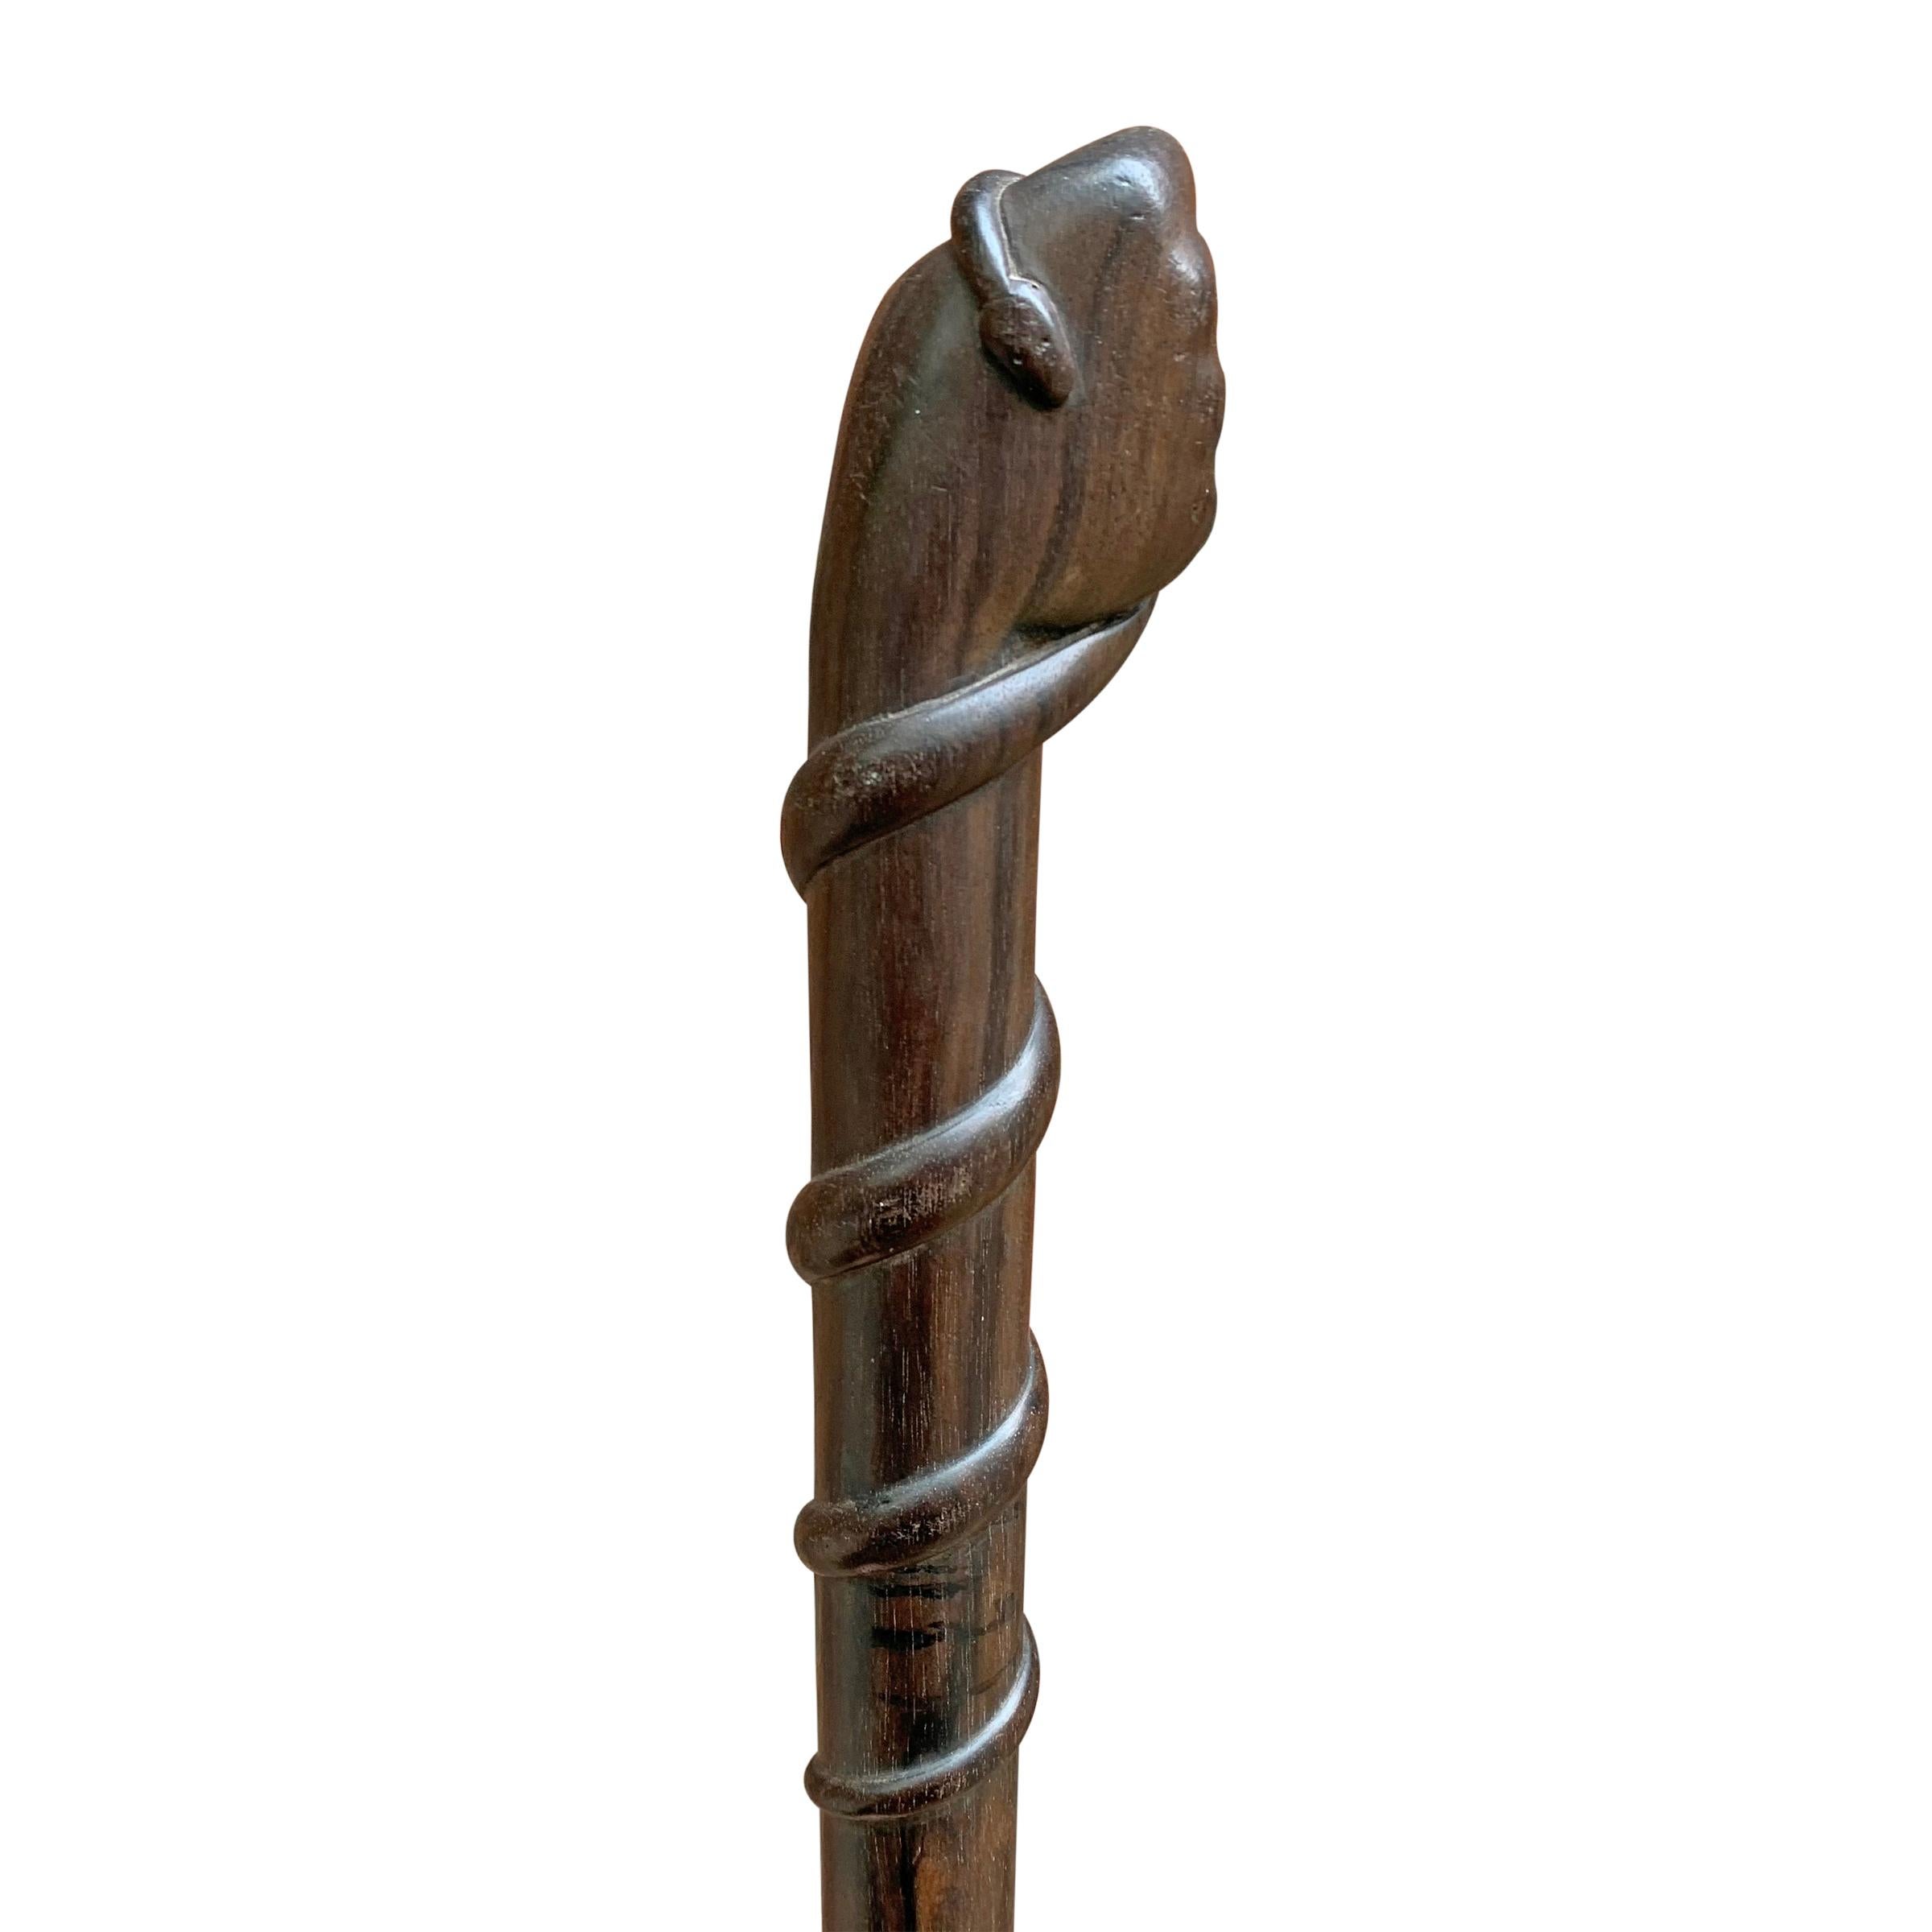 Hardwood 19th Century English Folk Art Walking Stick with Snake